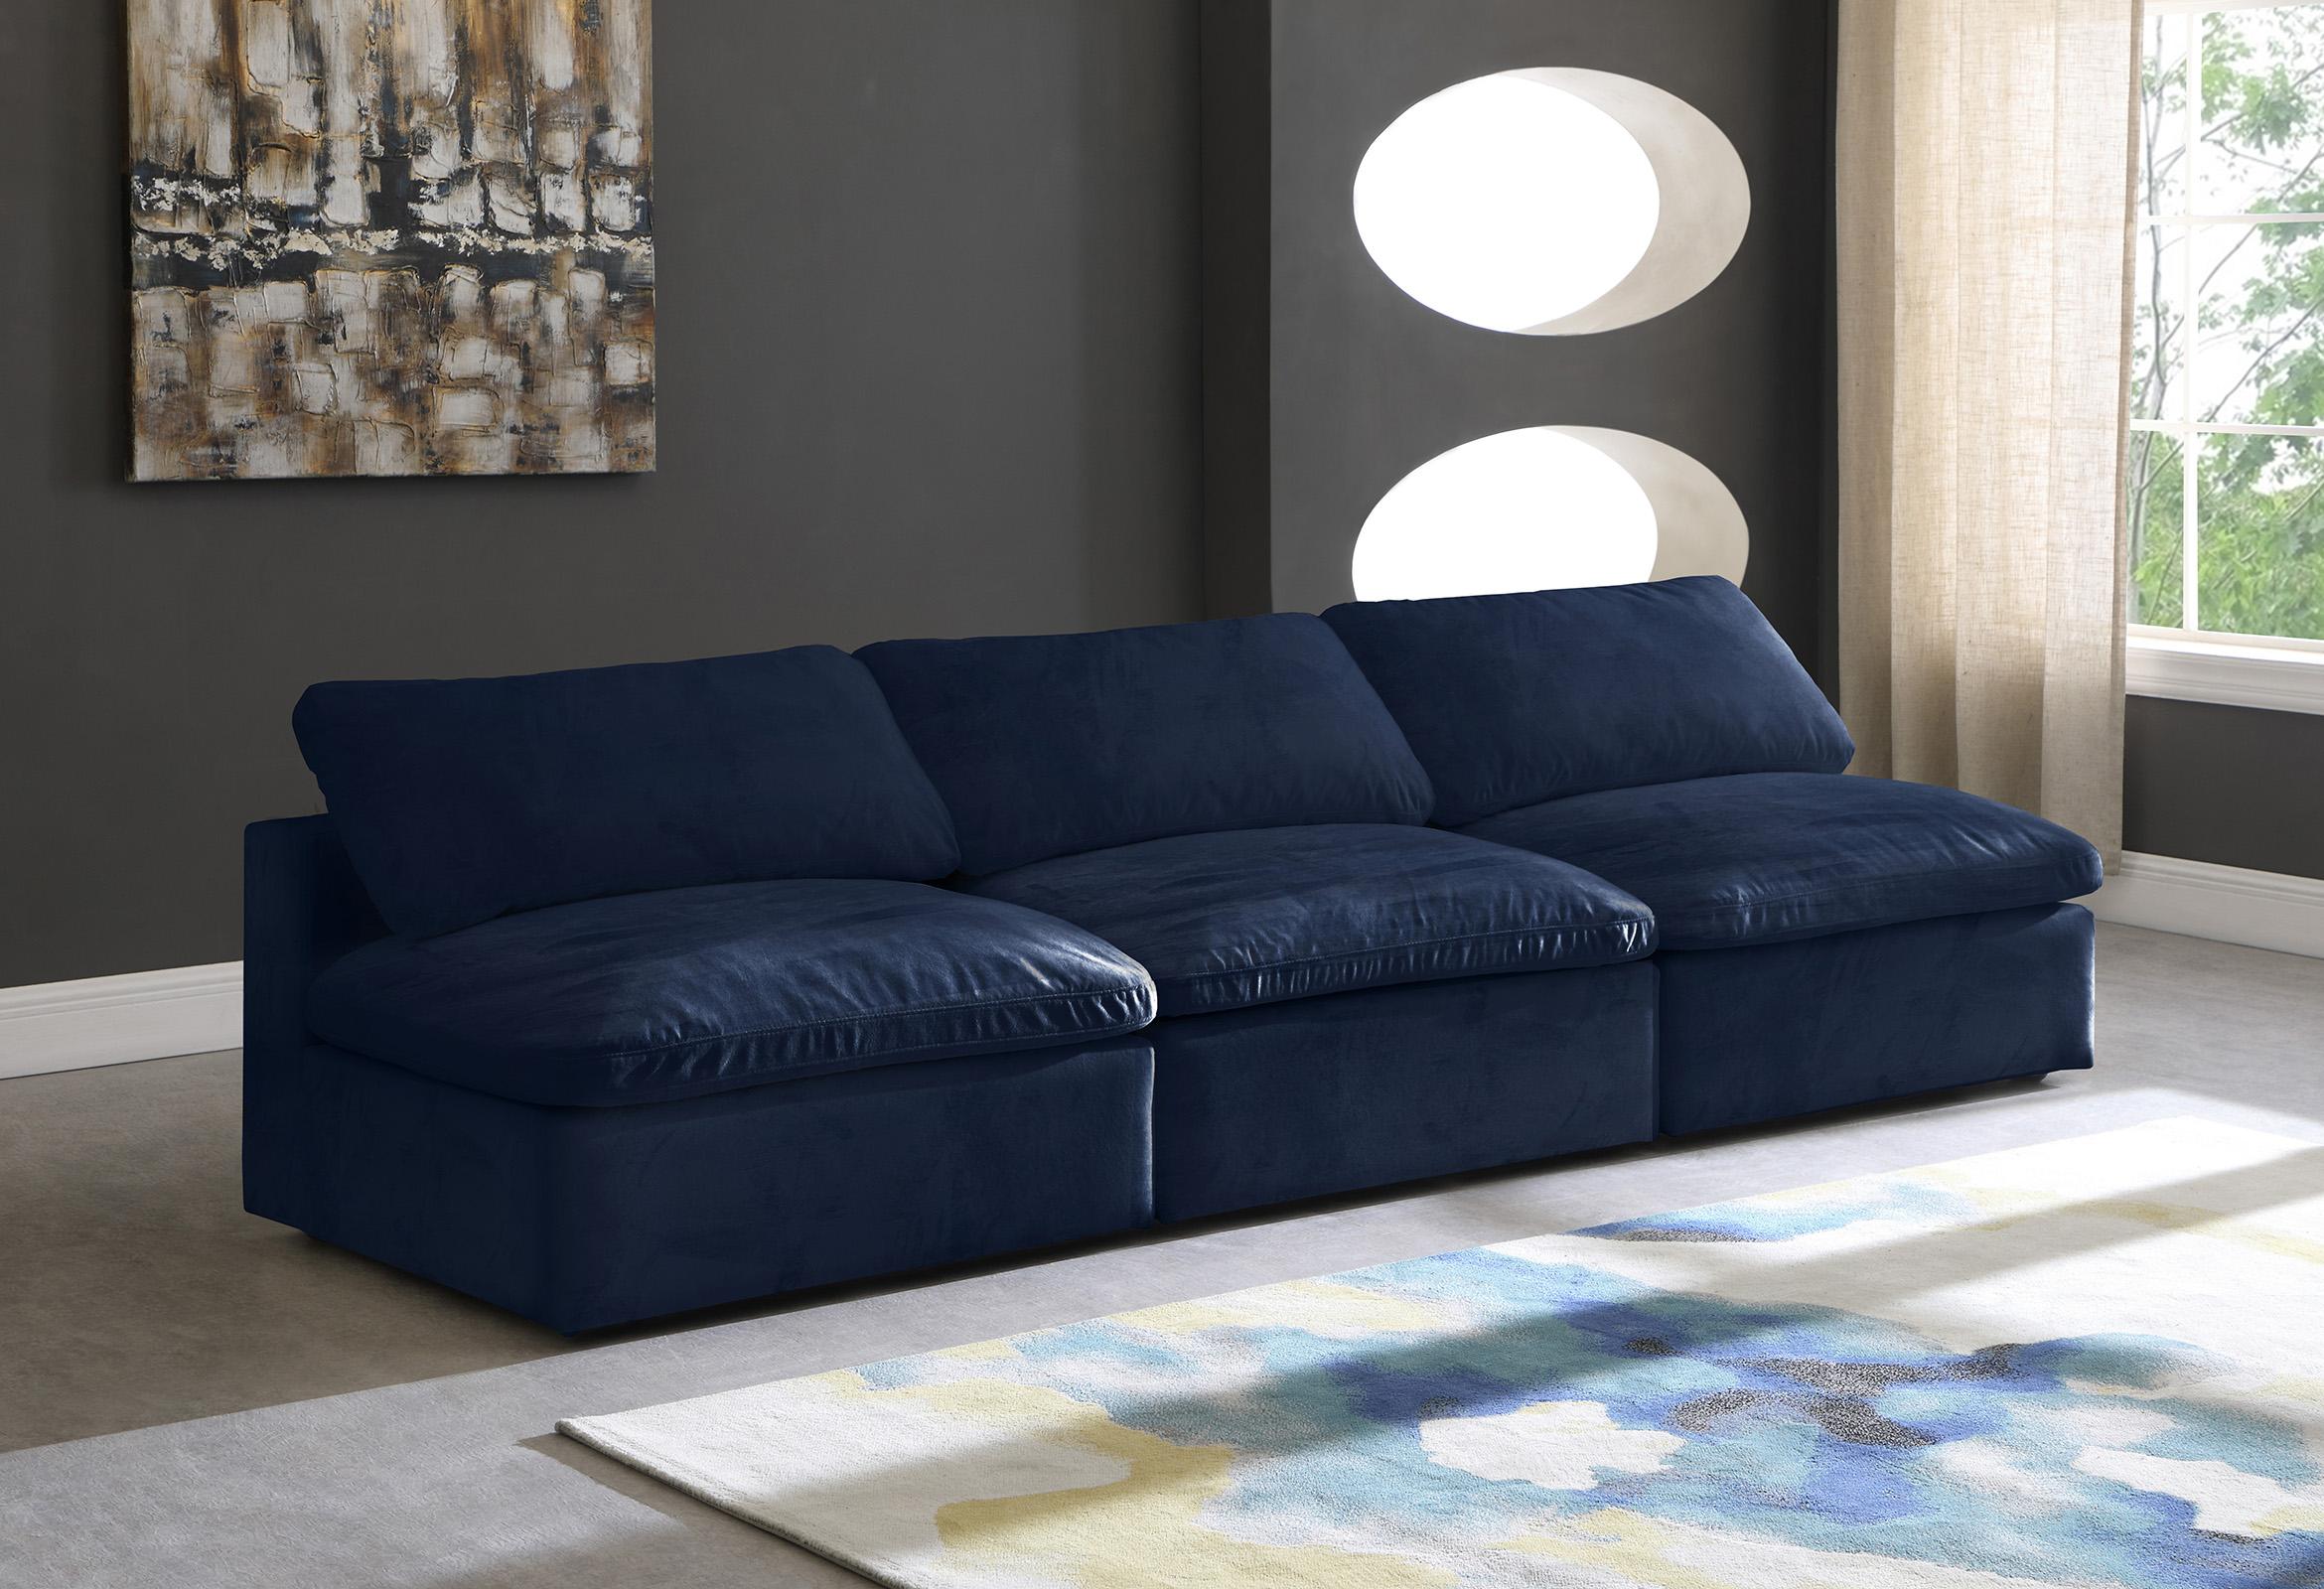 

    
Meridian Furniture 634Navy-S117 Modular Sofa Navy 634Navy-S117
